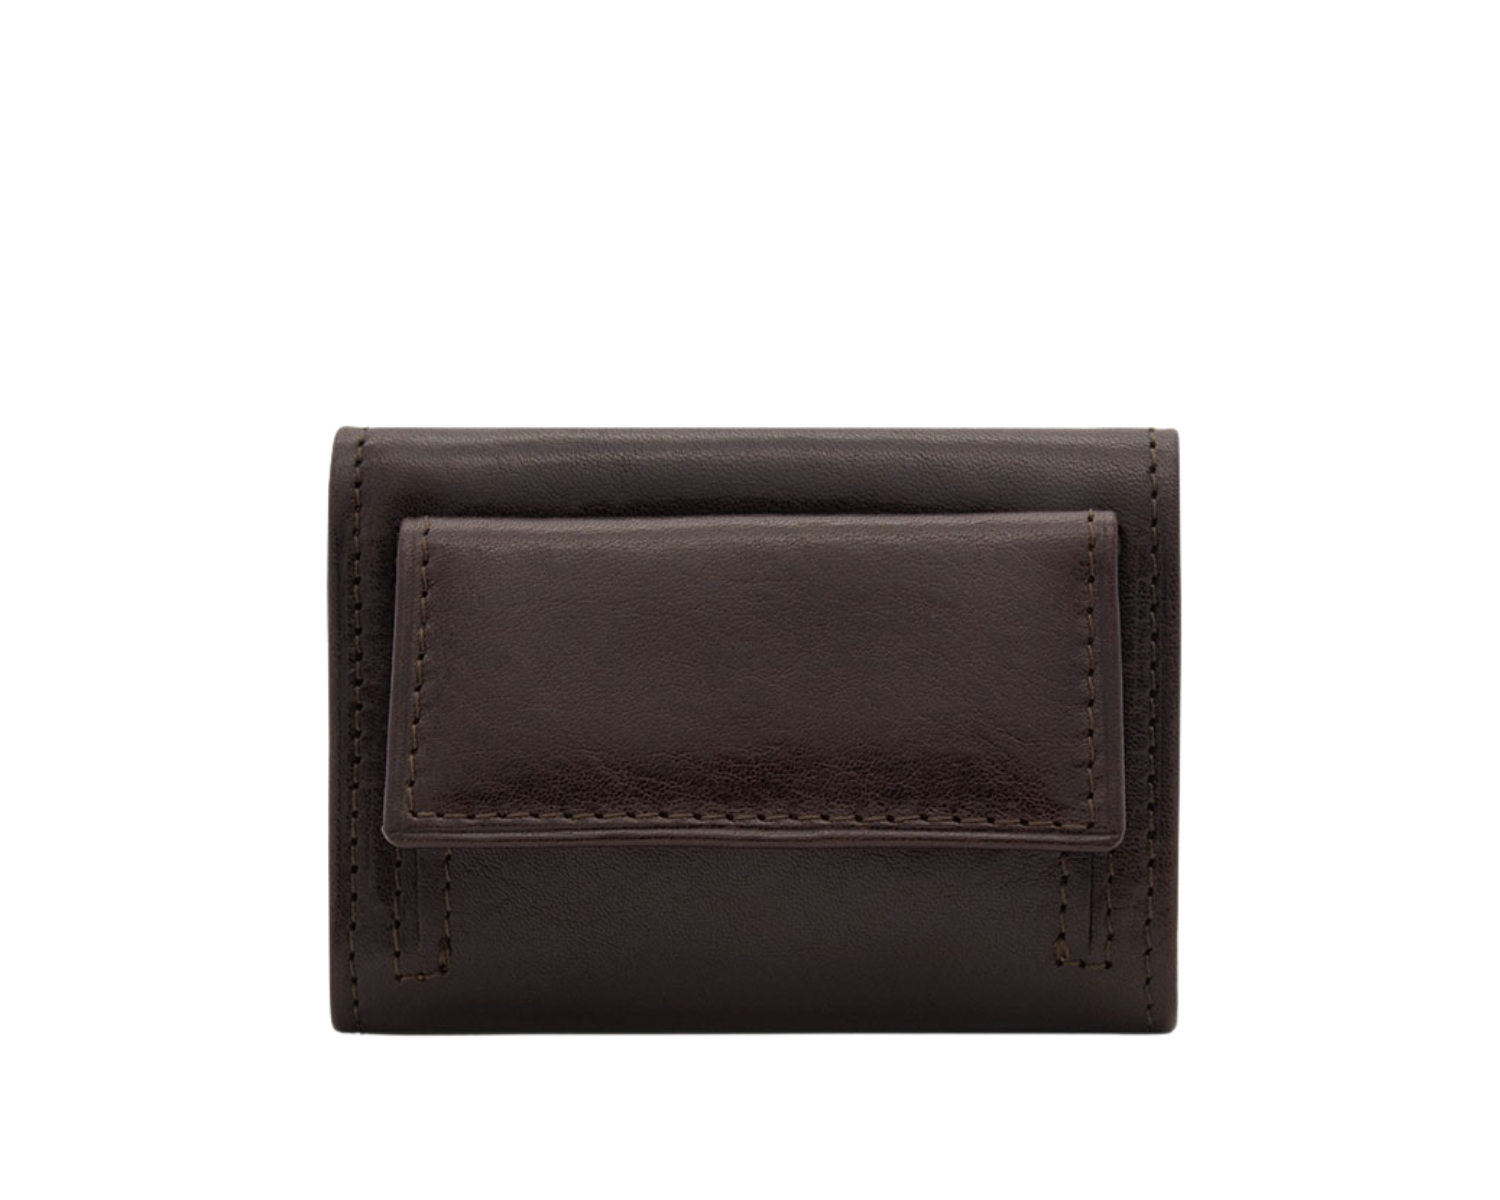 Cavalinho Men's Compact Leather Wallet - Brown - 28610539-2_4acb14cc-944b-4567-933a-d1cff0f0b422